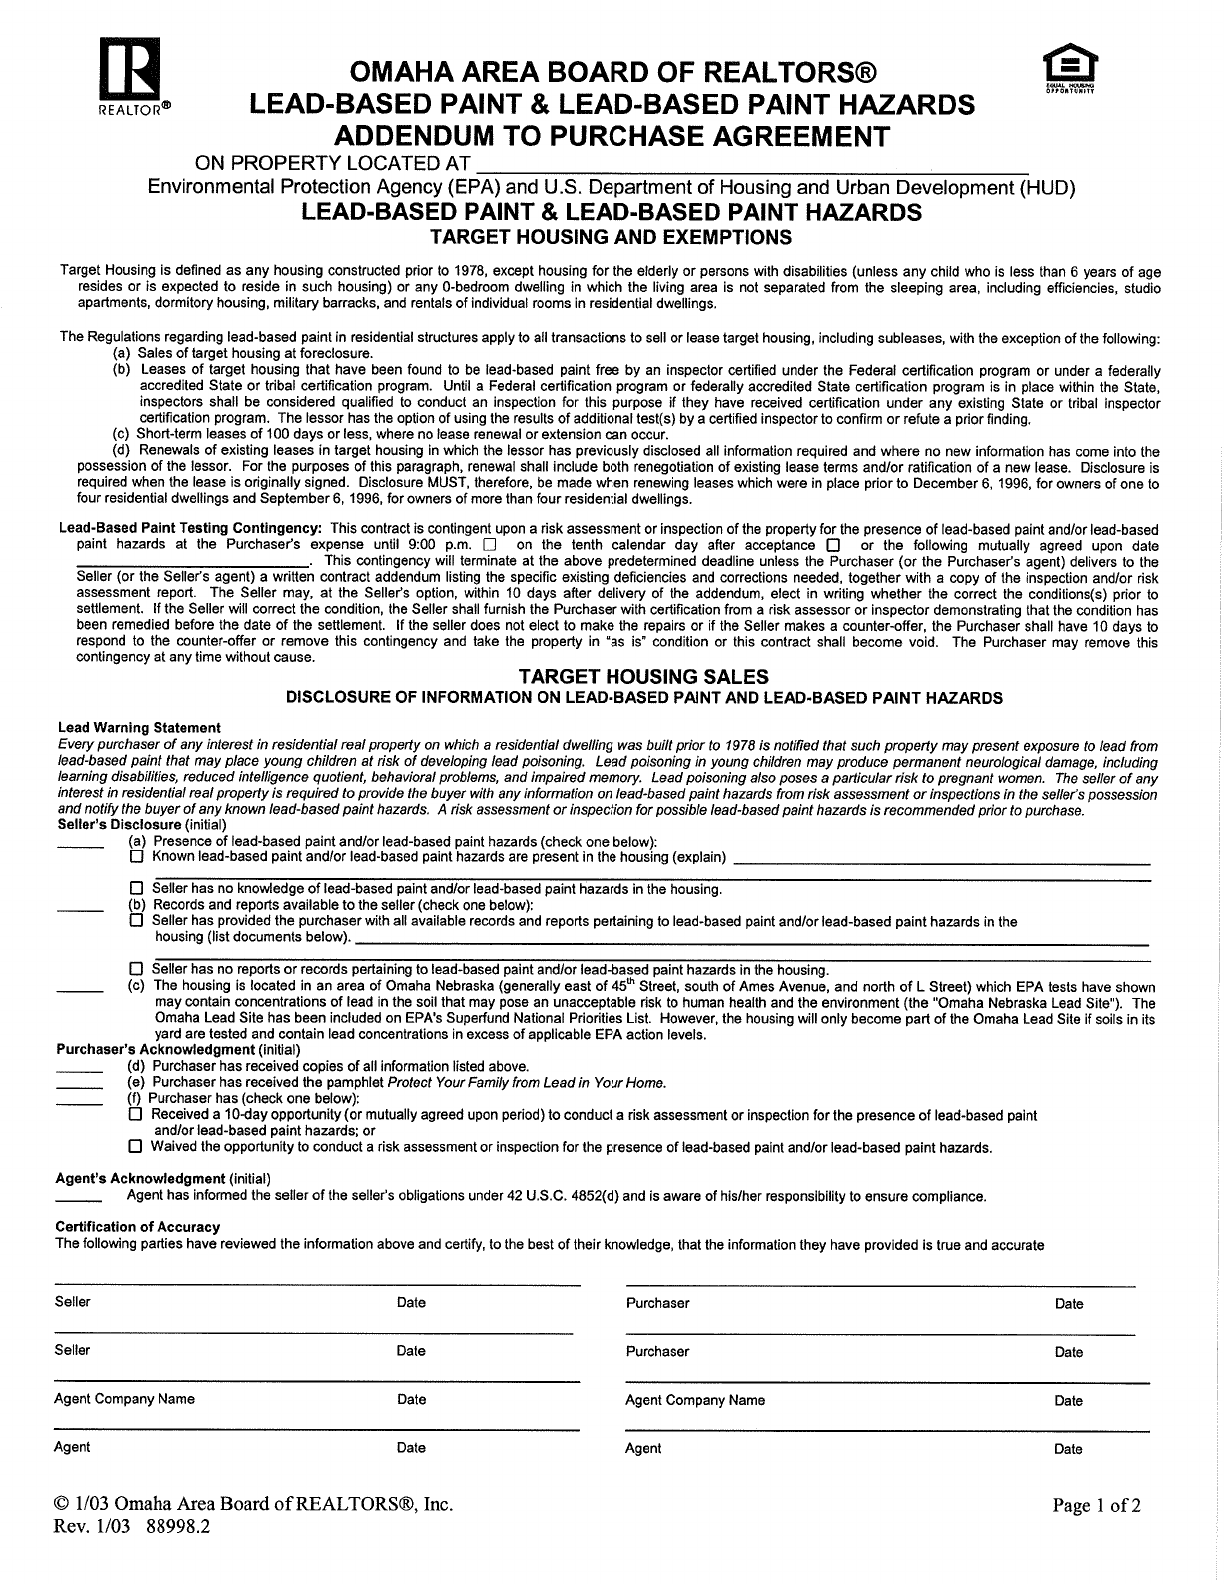 Nebraska Purchase Agreement Form